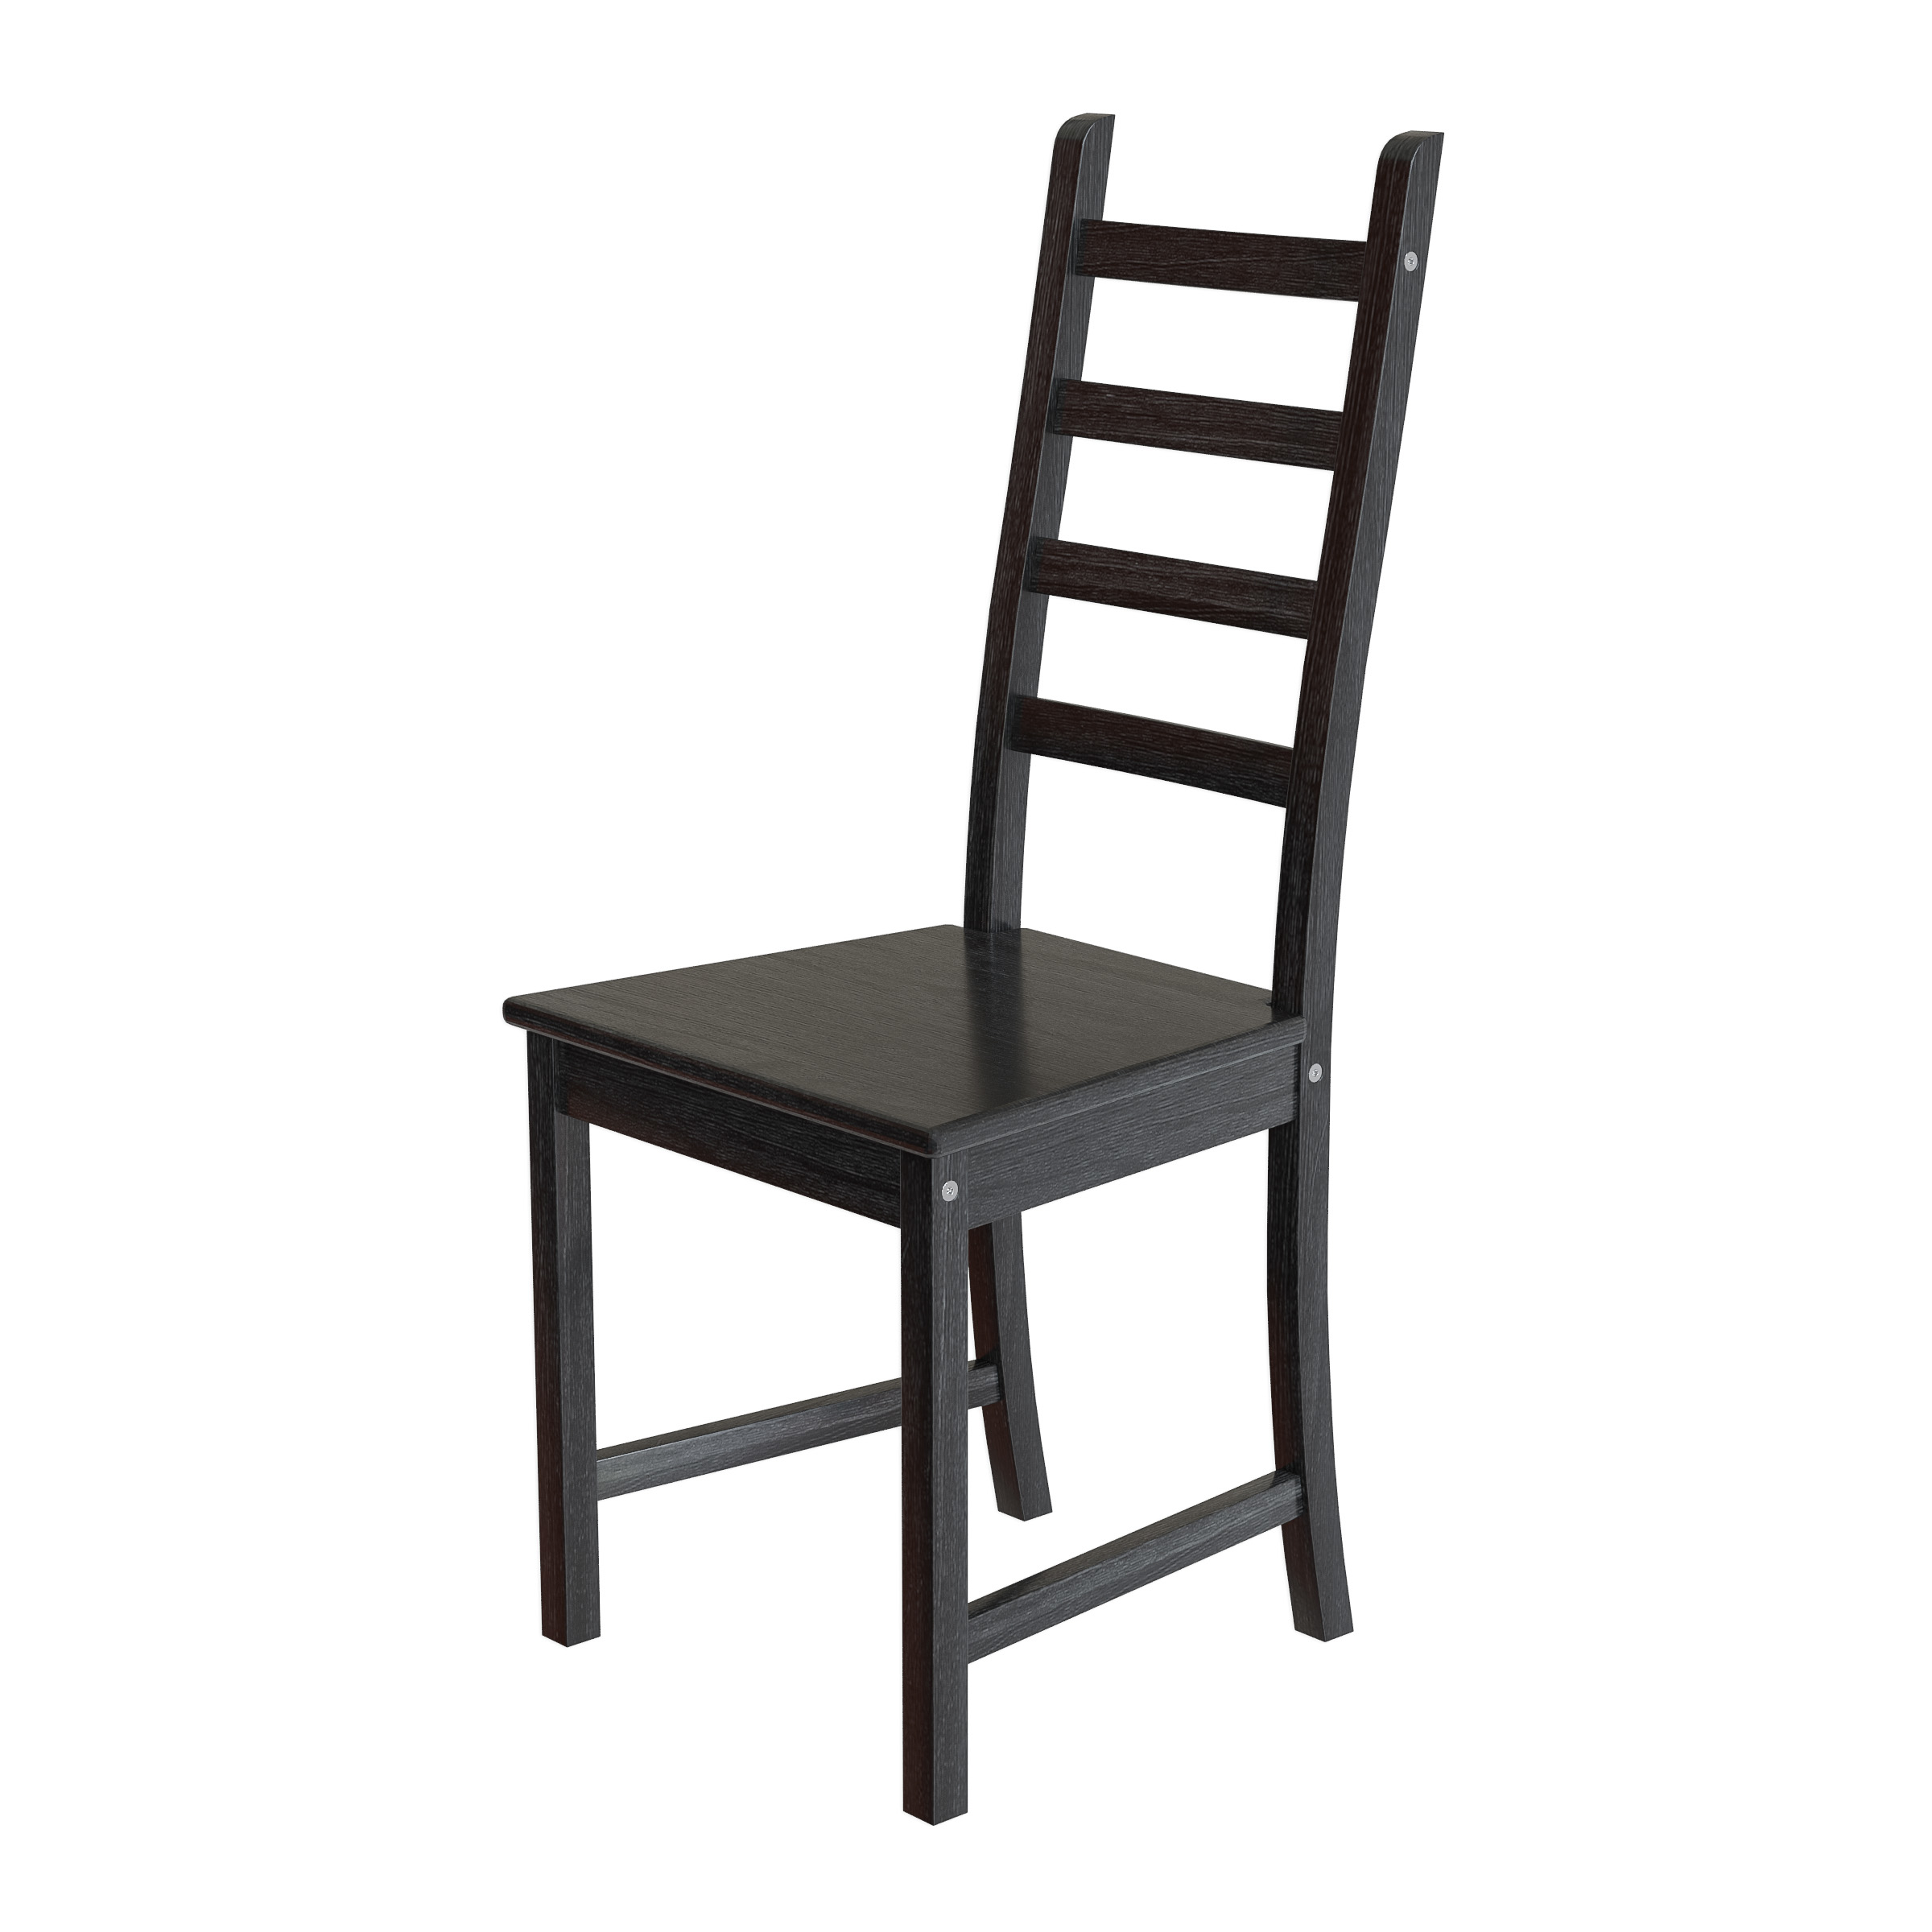 Ikea Kaustby Chair 3d Model Turbosquid 1497852